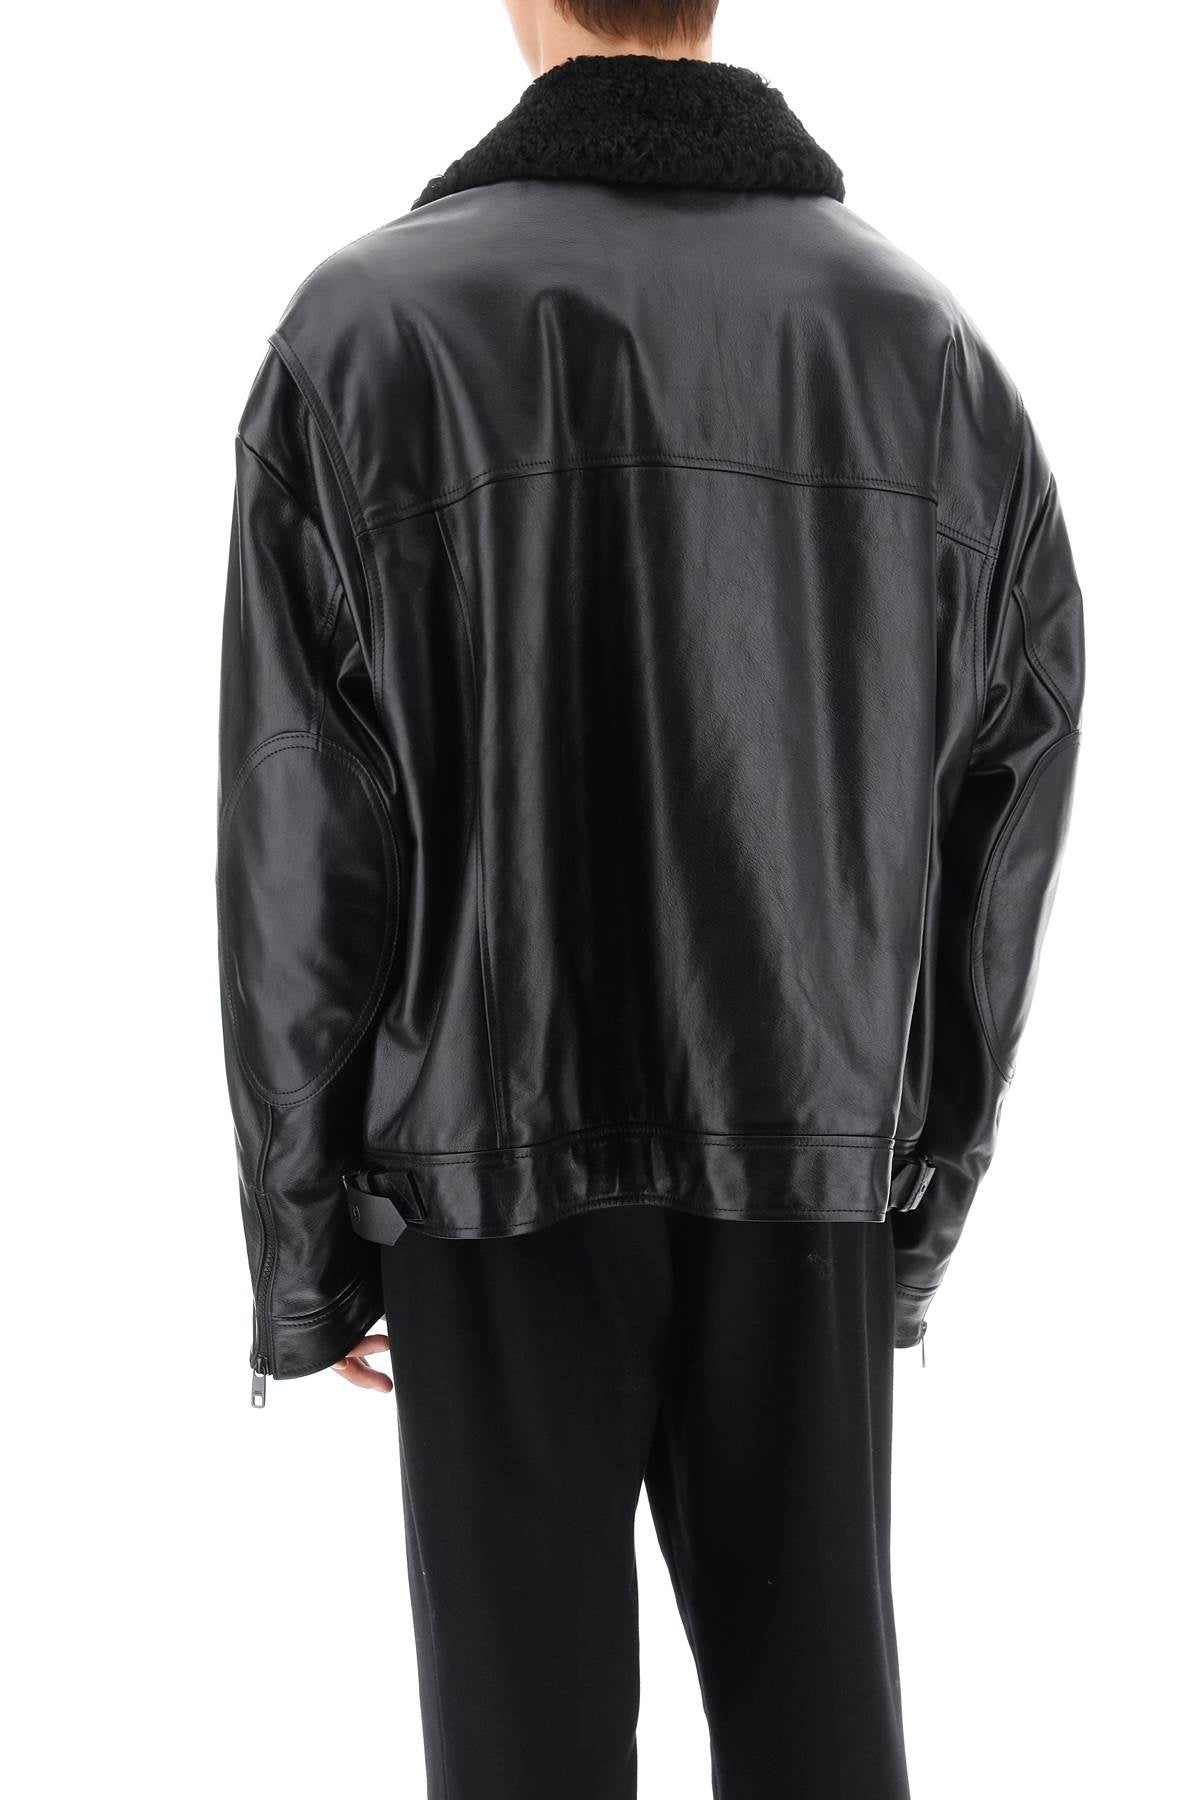 Dolce & gabbana leather-and-fur biker jacket-2